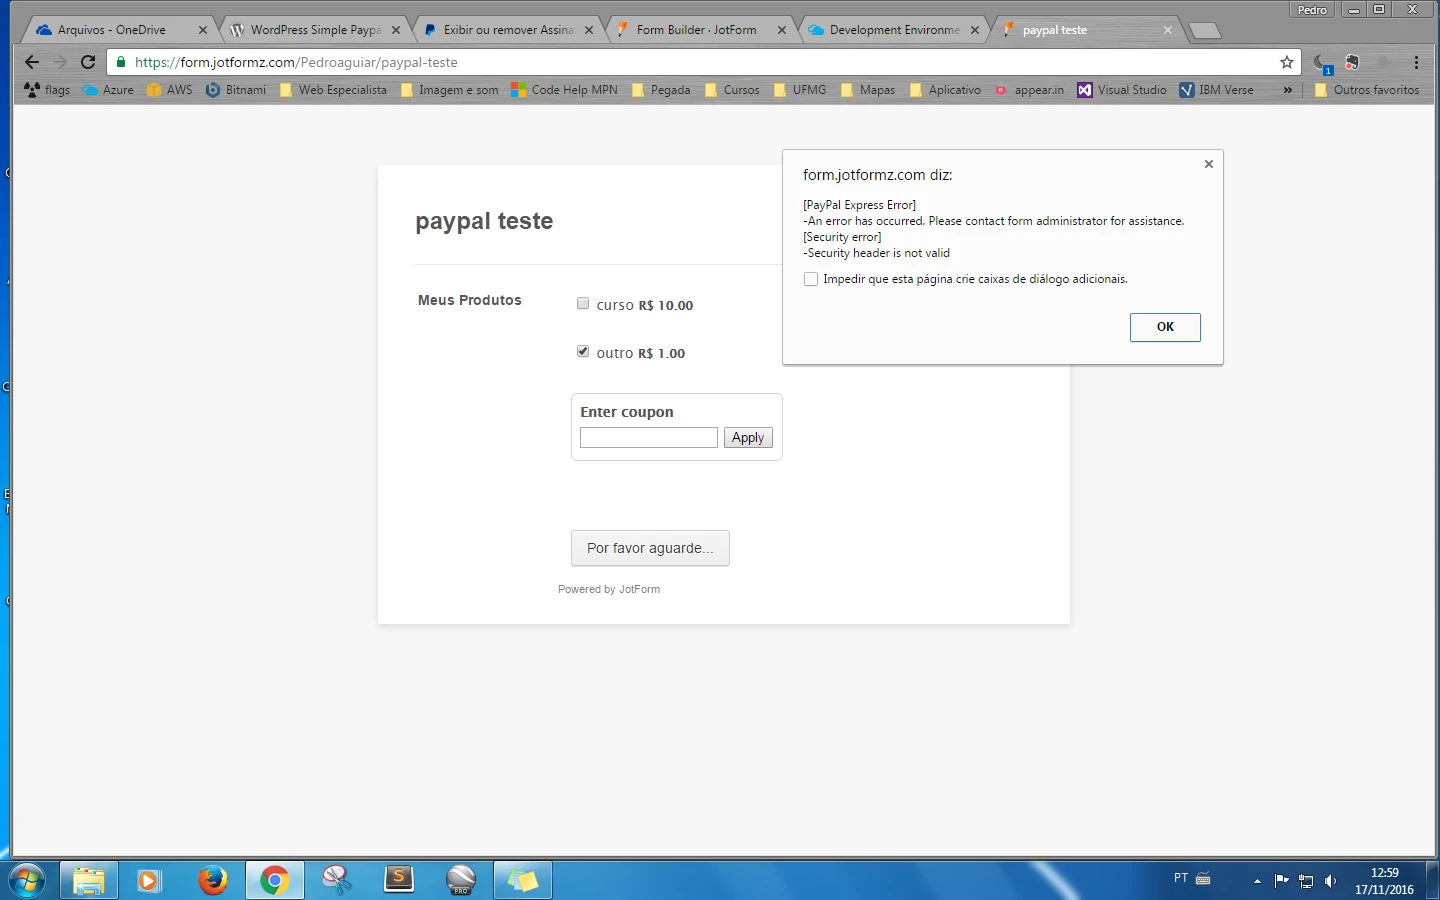 PayPal express API  error Image 1 Screenshot 20